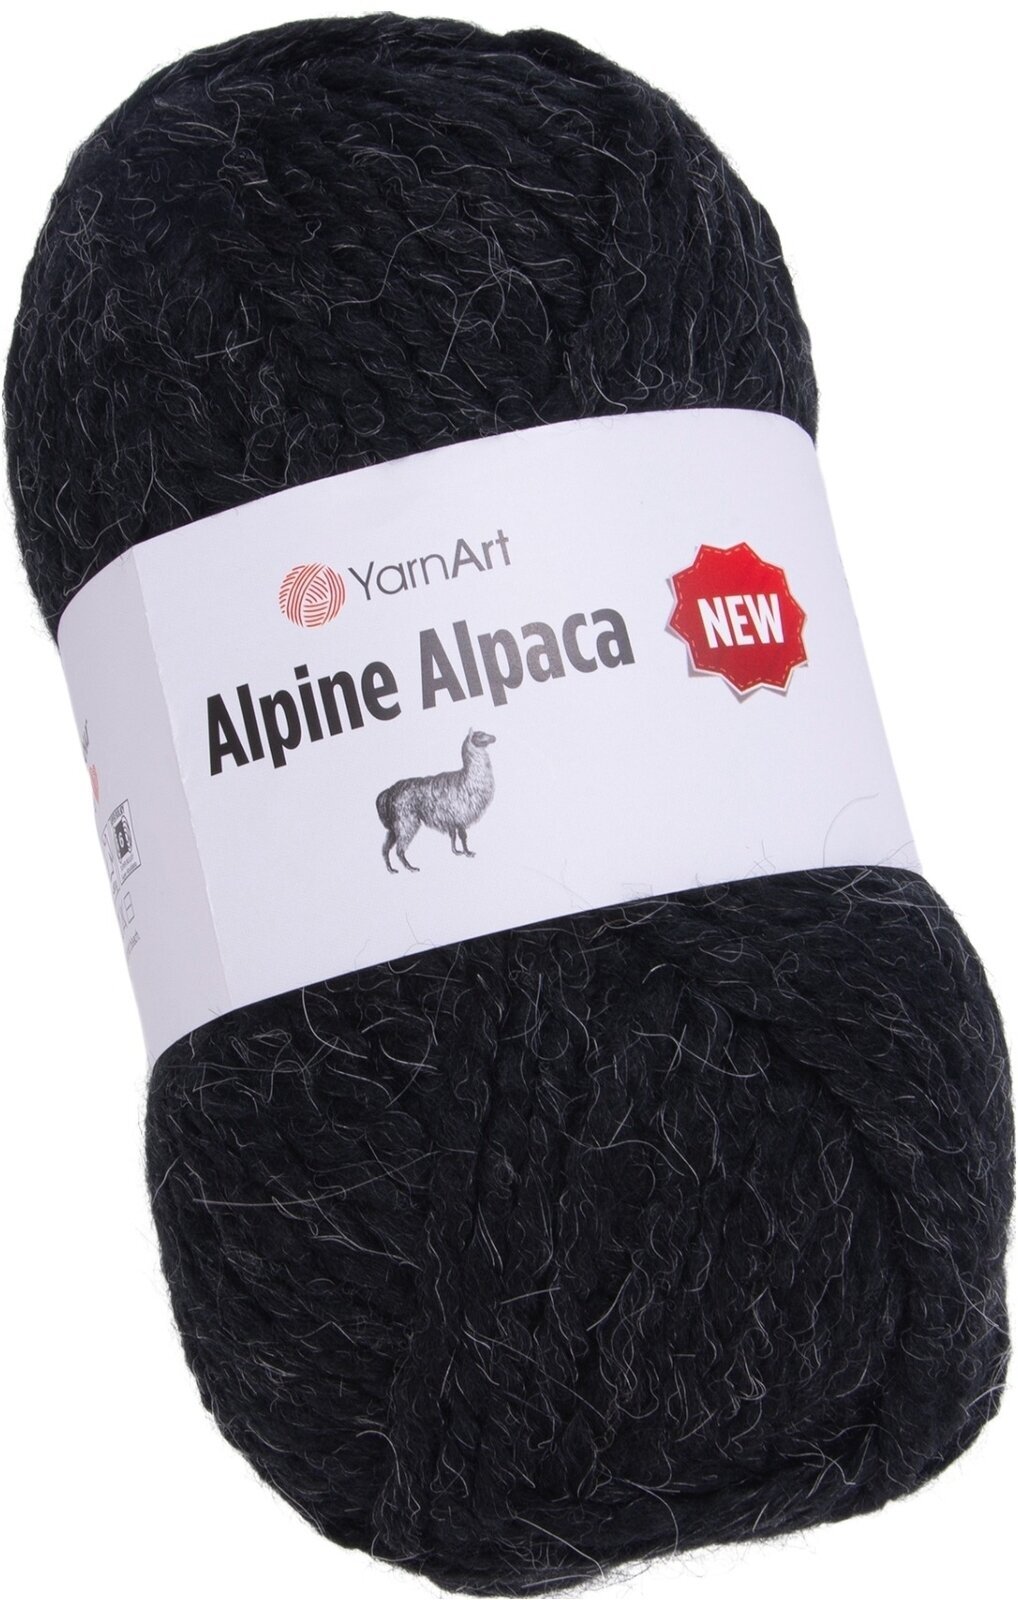 Knitting Yarn Yarn Art Alpine Alpaca 1439